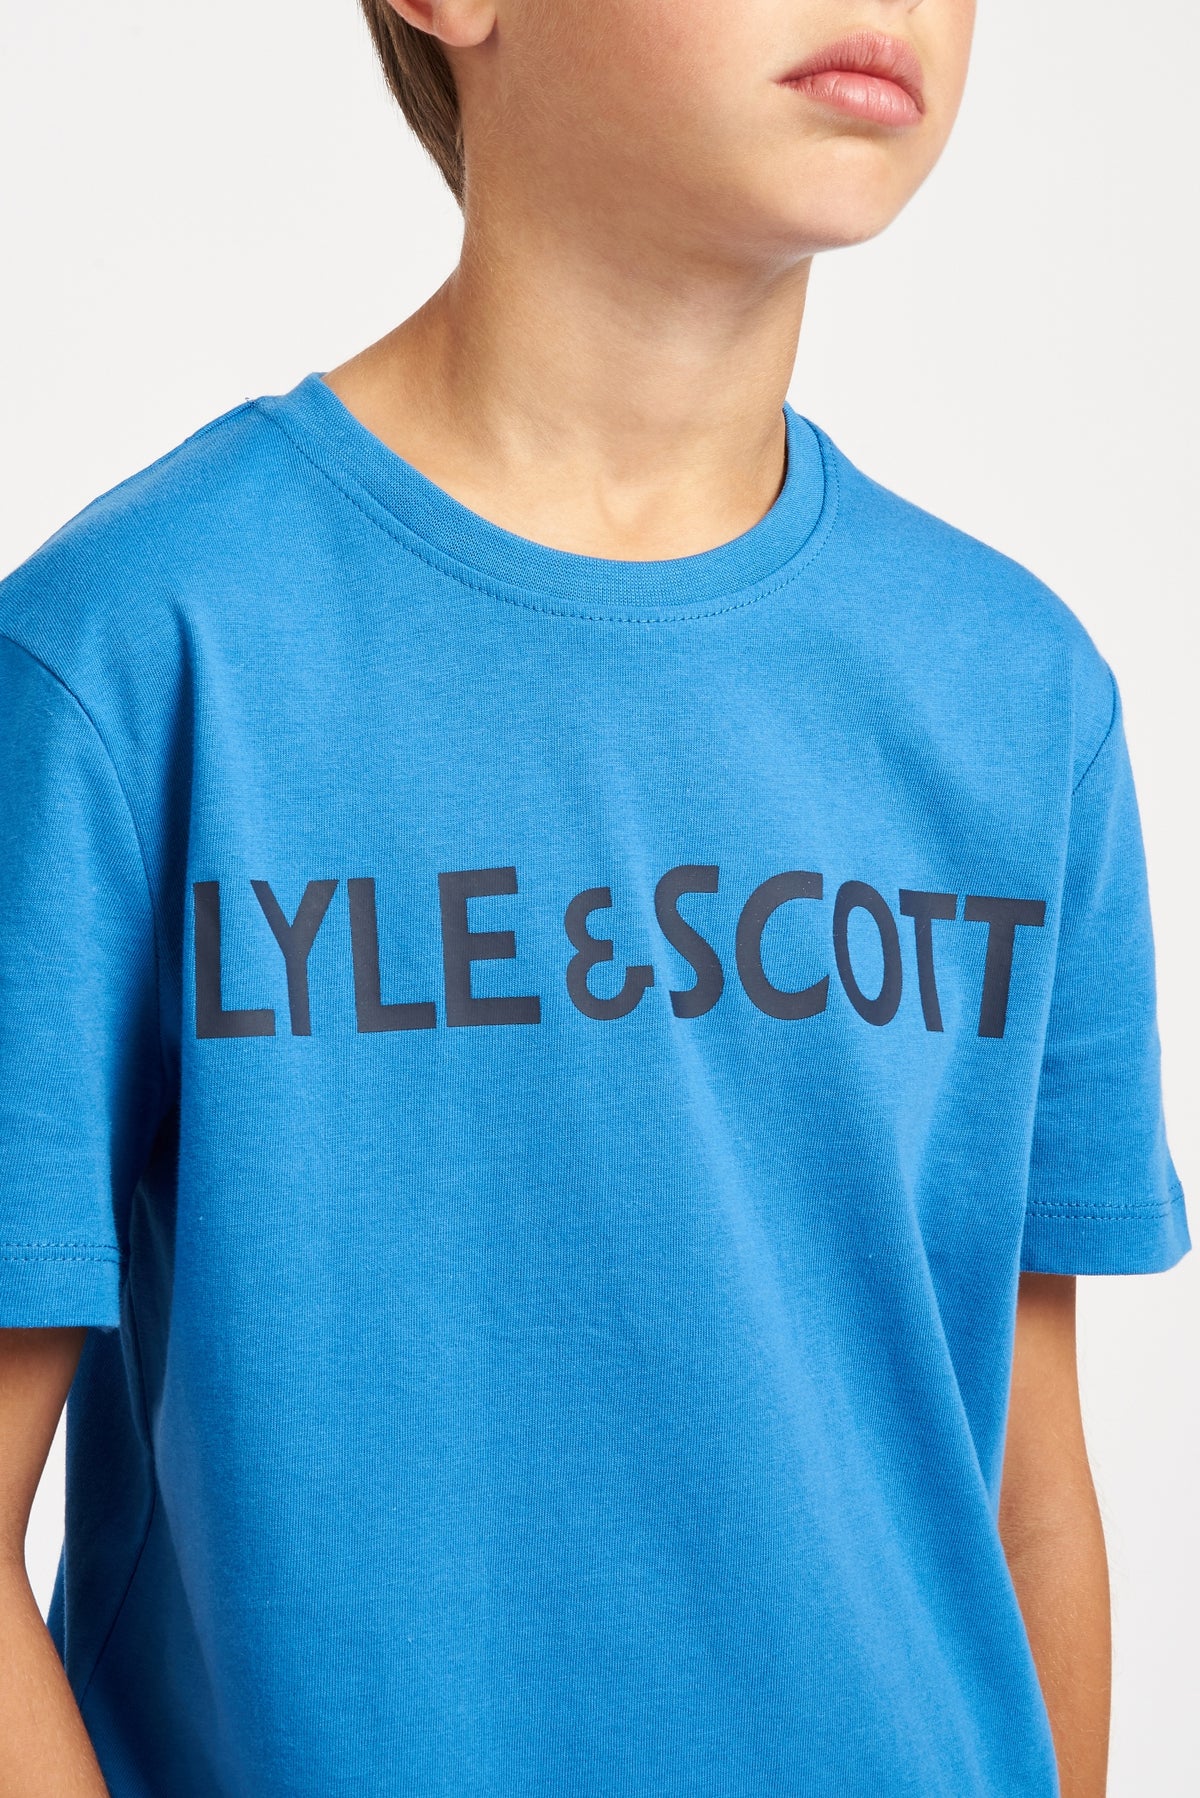 Lyle & Scott Boys 'Text Tee' Short Sleeved T-Shirt, 05, Lsc0896, Vallarta Blue